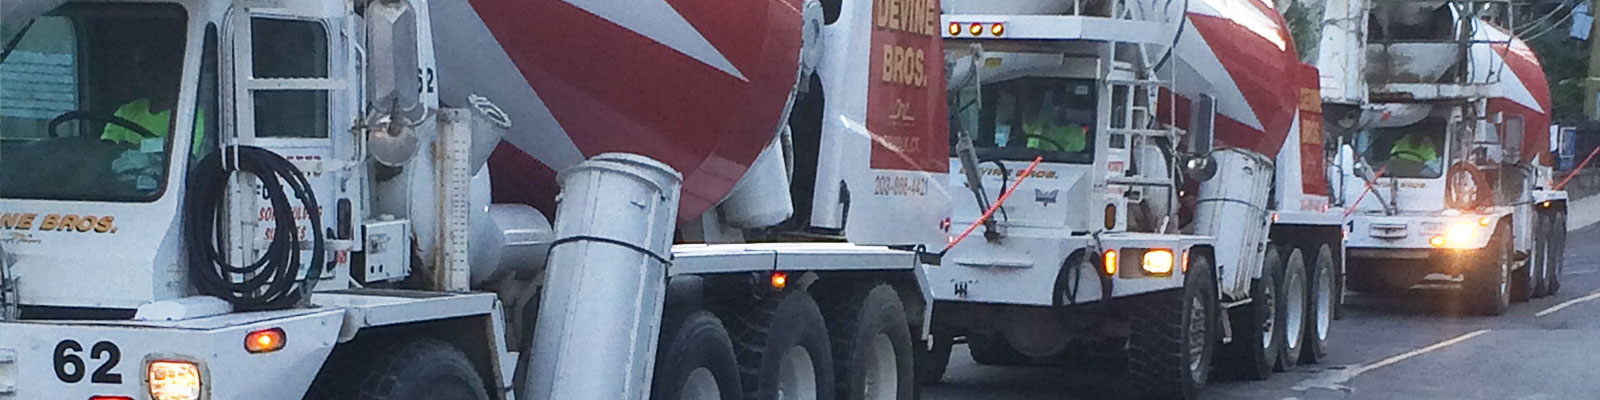 Up Close of Cement Trucks | Cement Westport | Concrete Supplies Norwalk